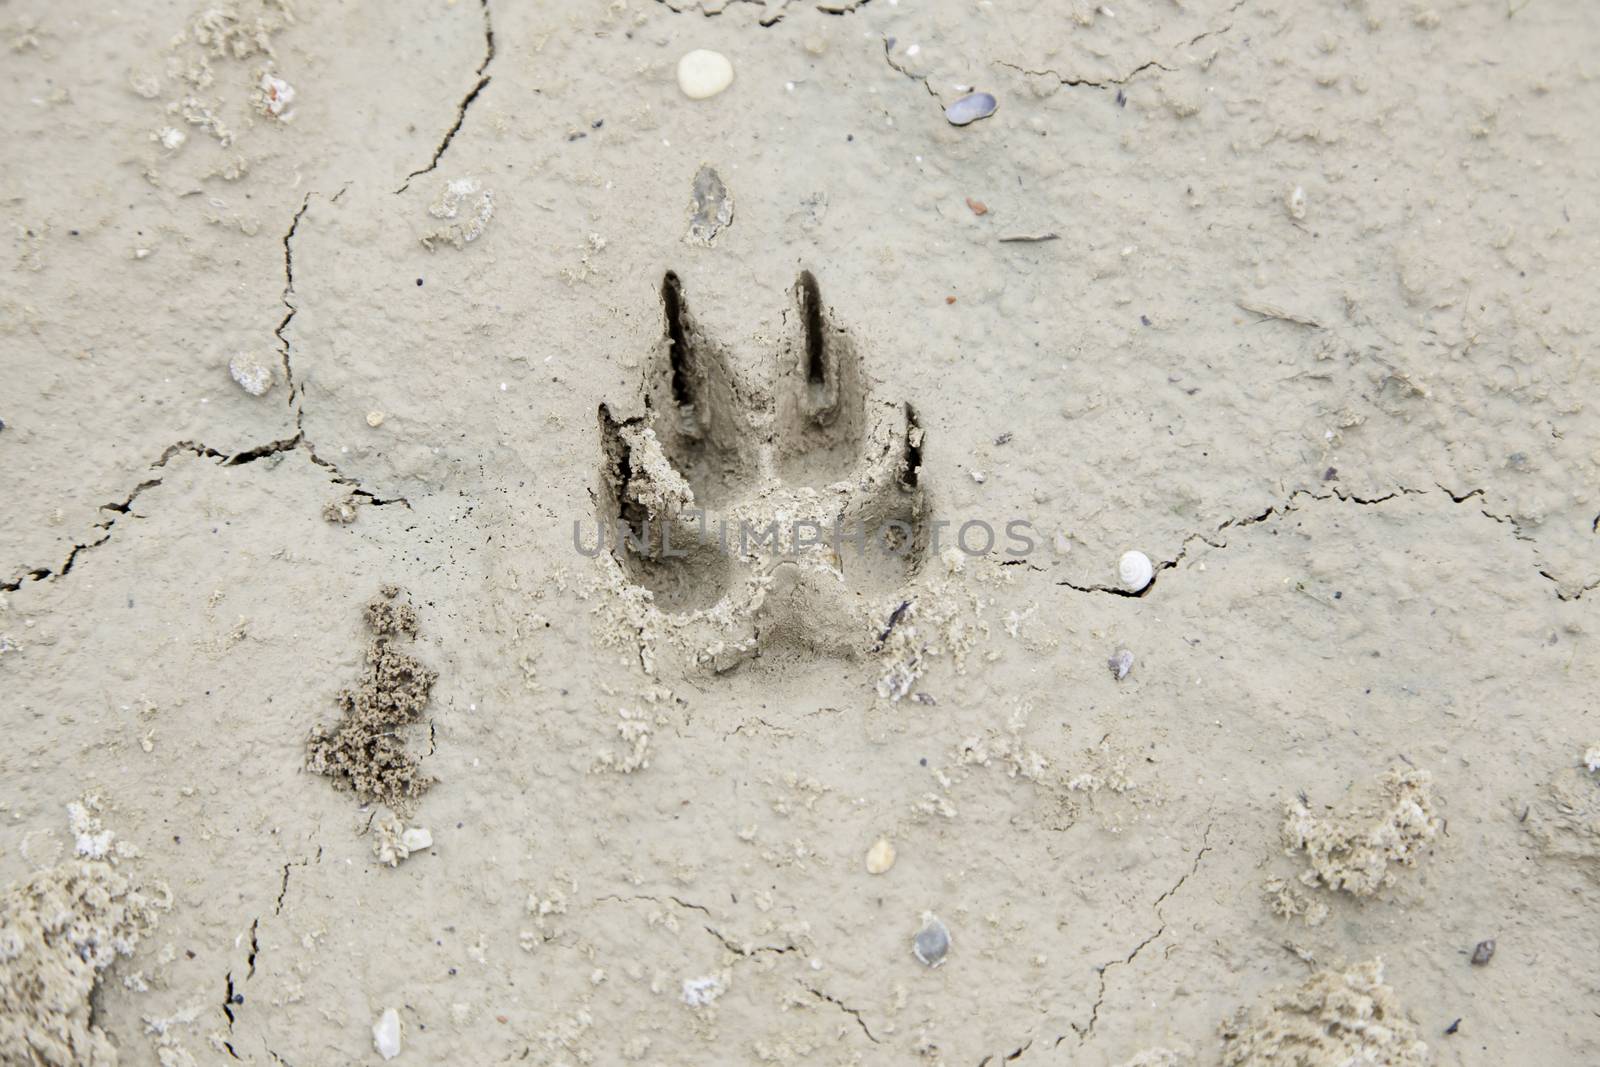 Dog footprints in the mud by esebene